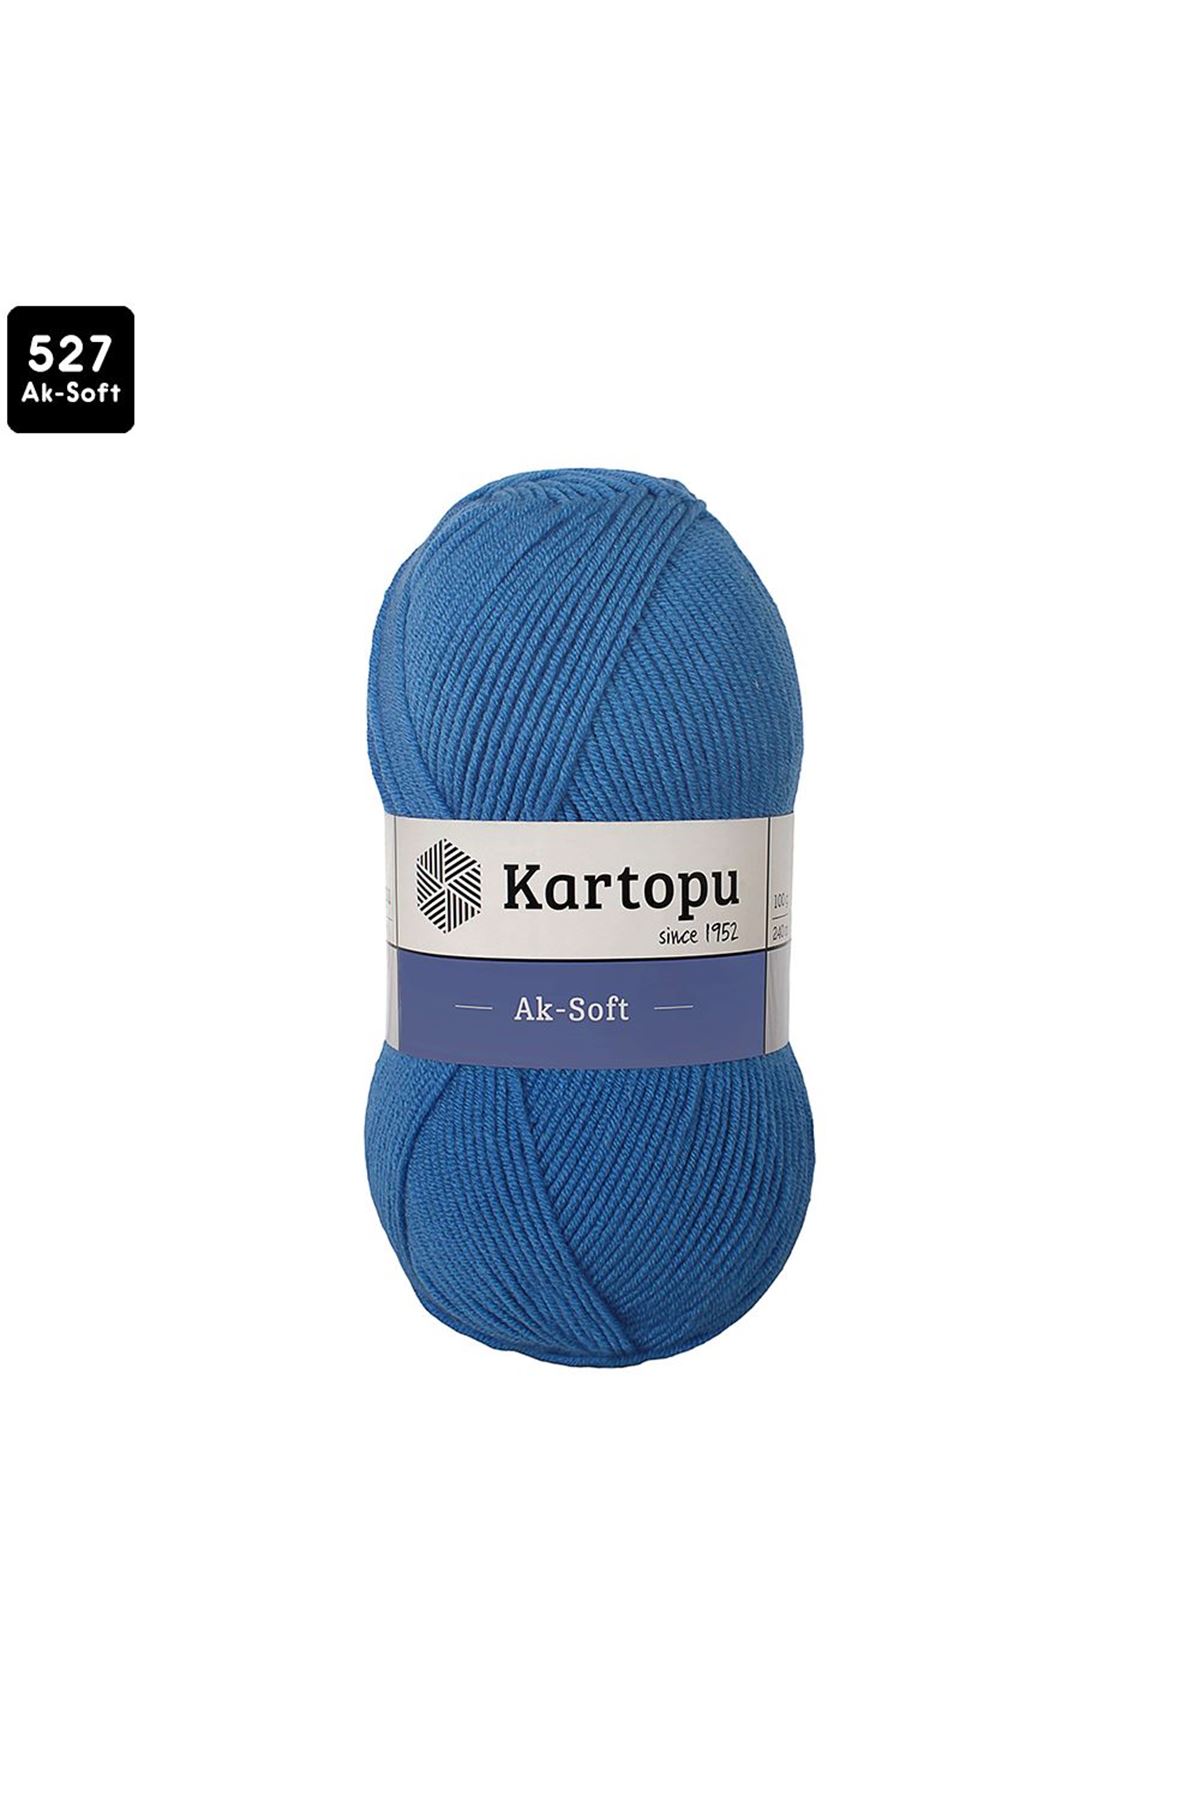 Kartopu Ak-Soft Renk No:527